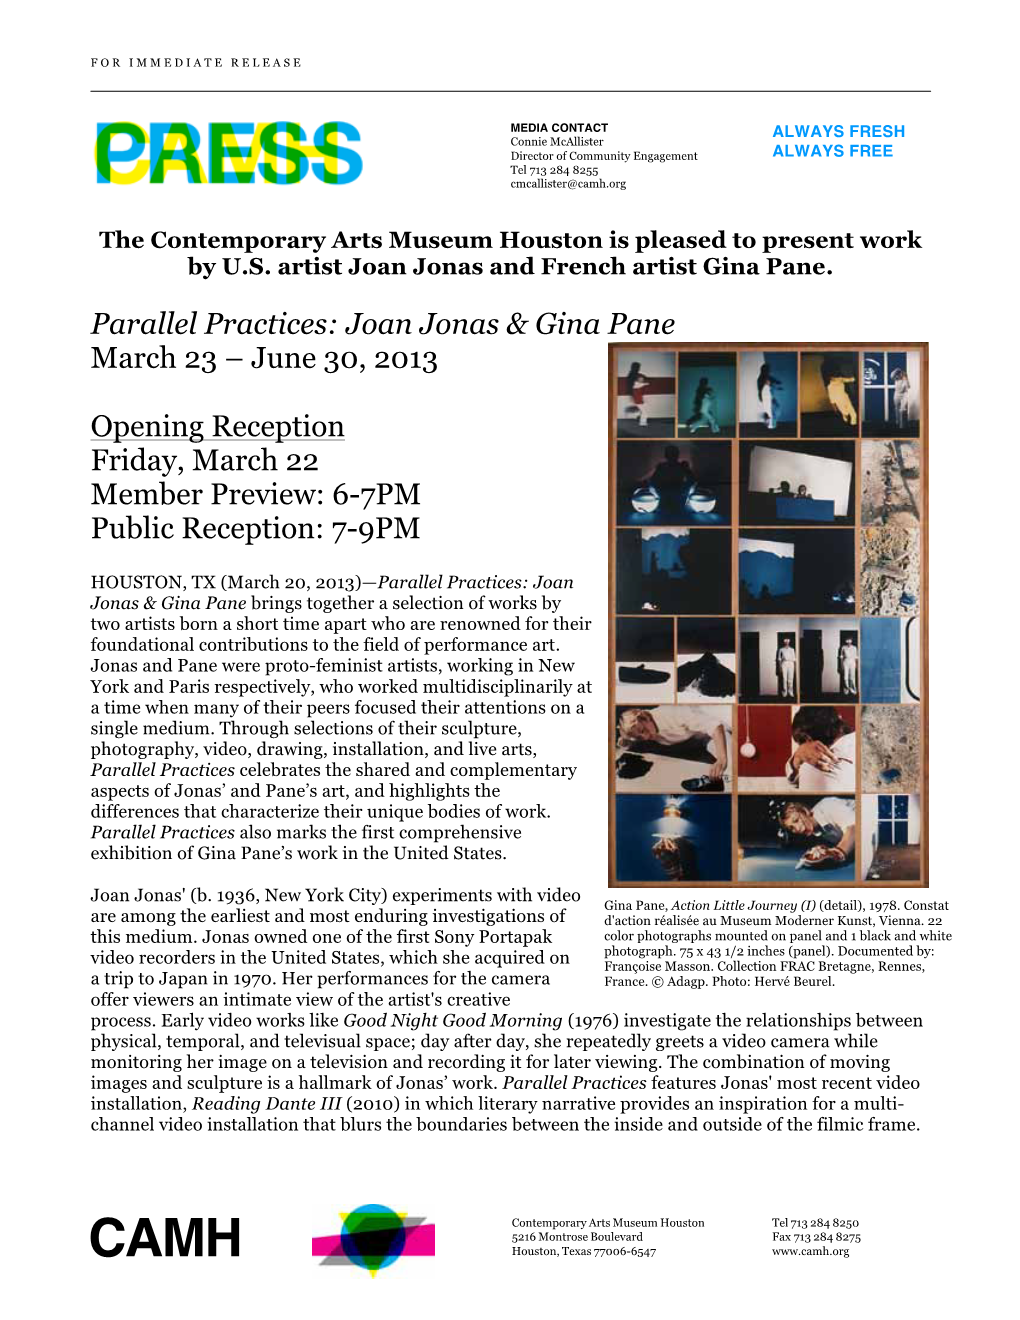 Parallel Practices: Joan Jonas & Gina Pane March 23 – June 30, 2013